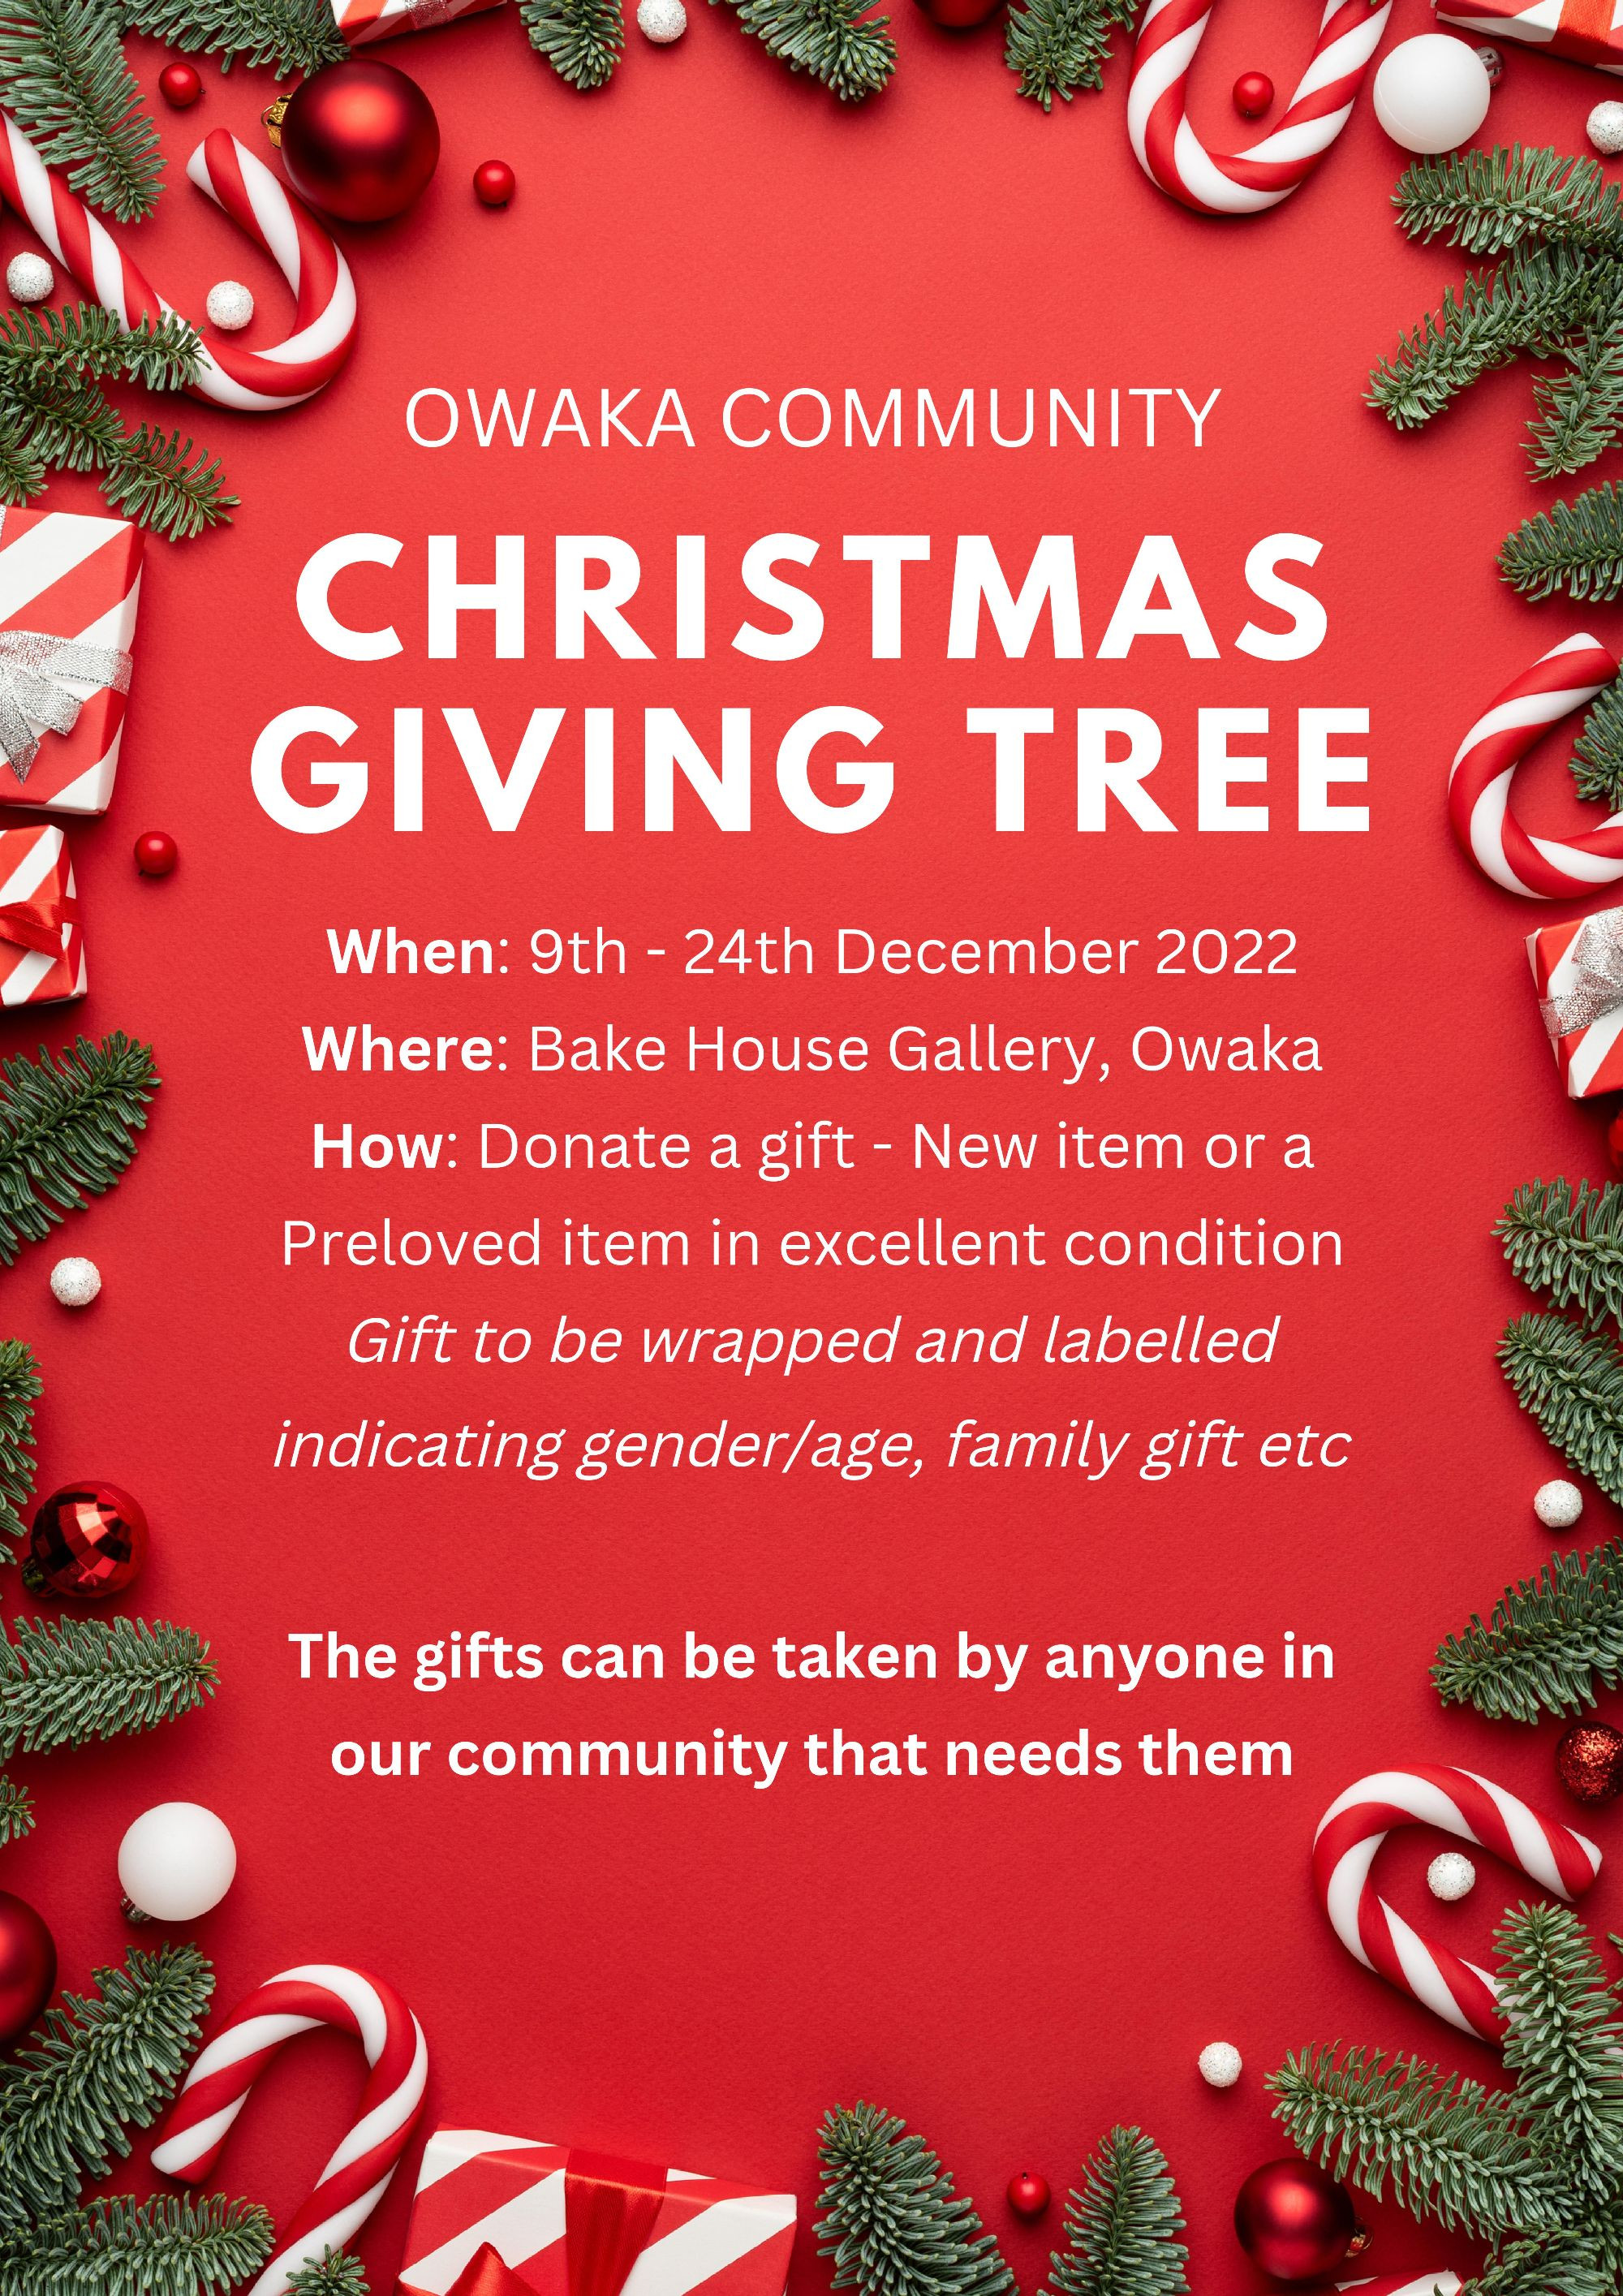 Owaka Community Christmas Giving Tree